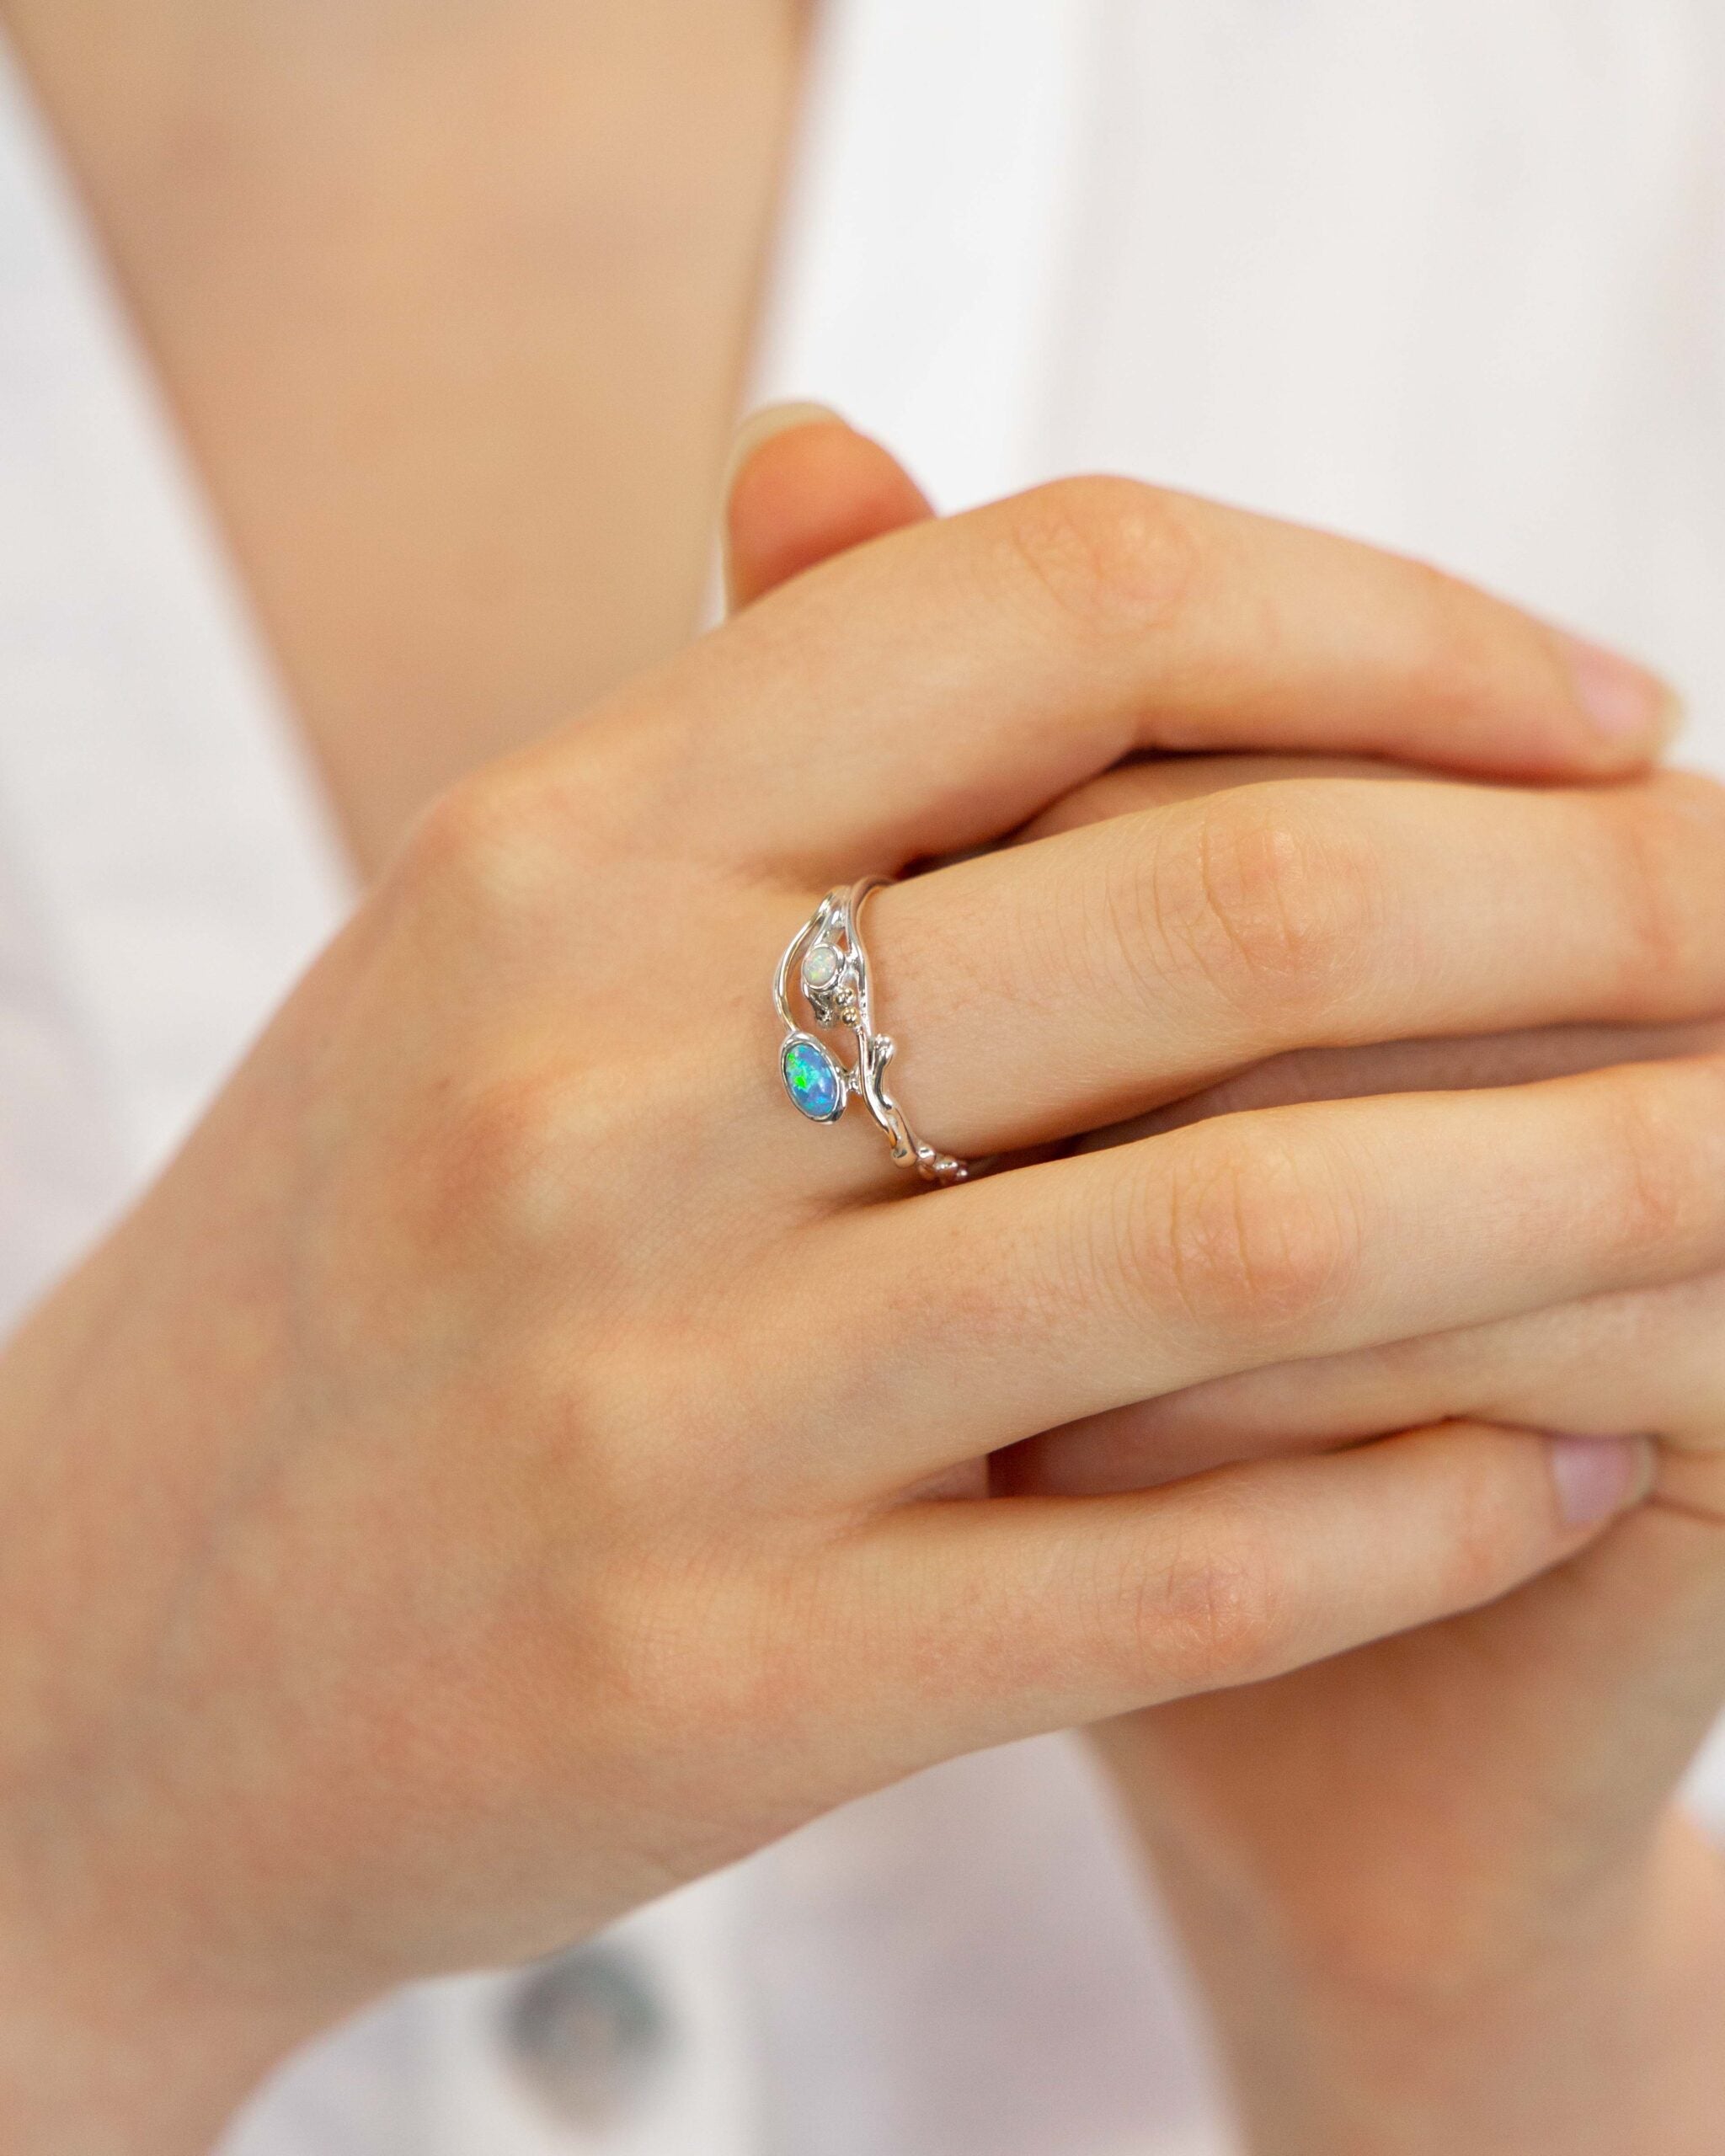 Blue & White Opal Flower Ring - The Nancy Smillie Shop - Art, Jewellery & Designer Gifts Glasgow